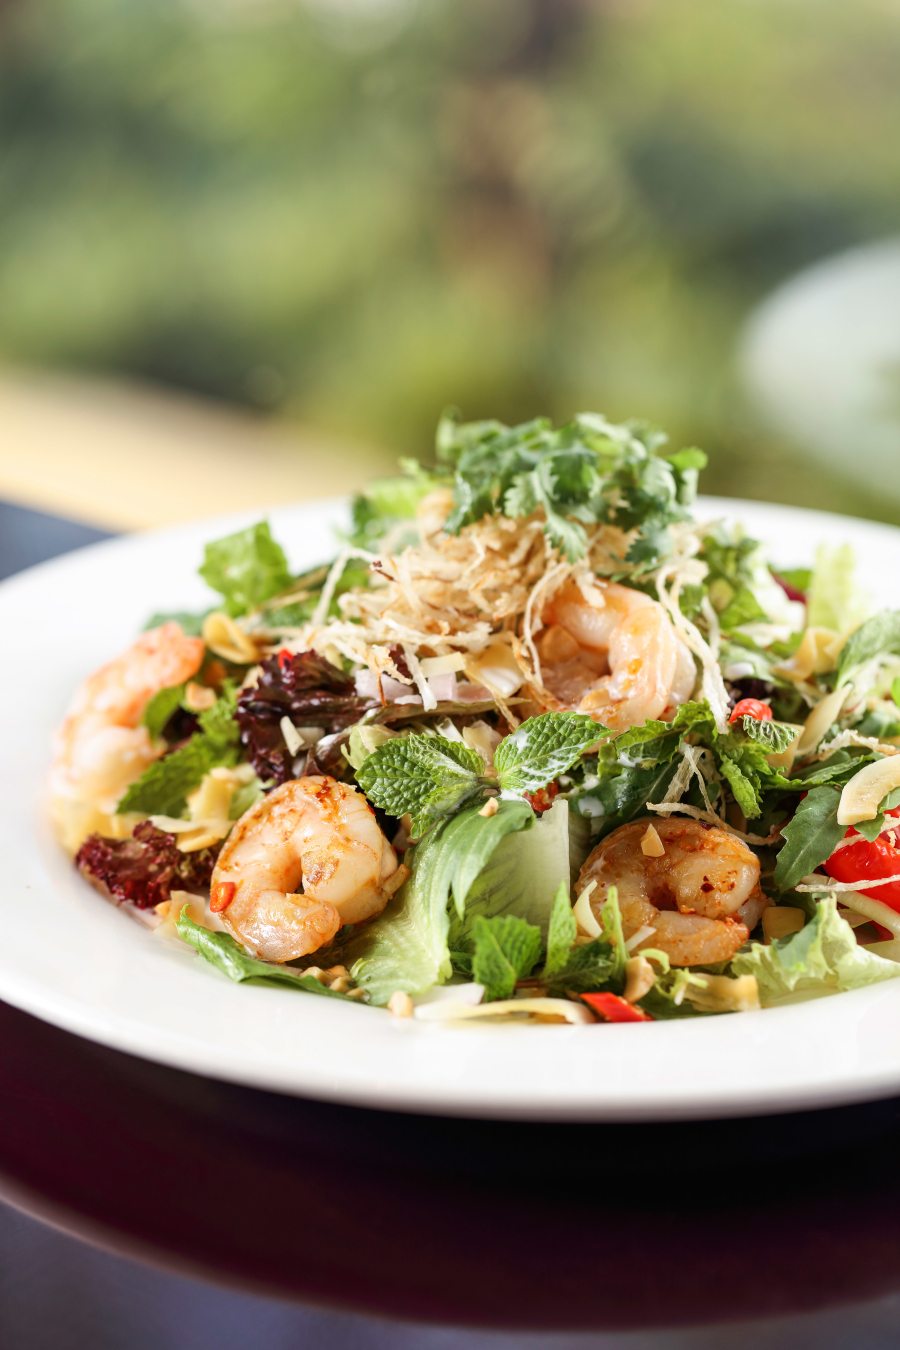 泰式碳烤大虾沙拉 Thai Style Shrimp Salad